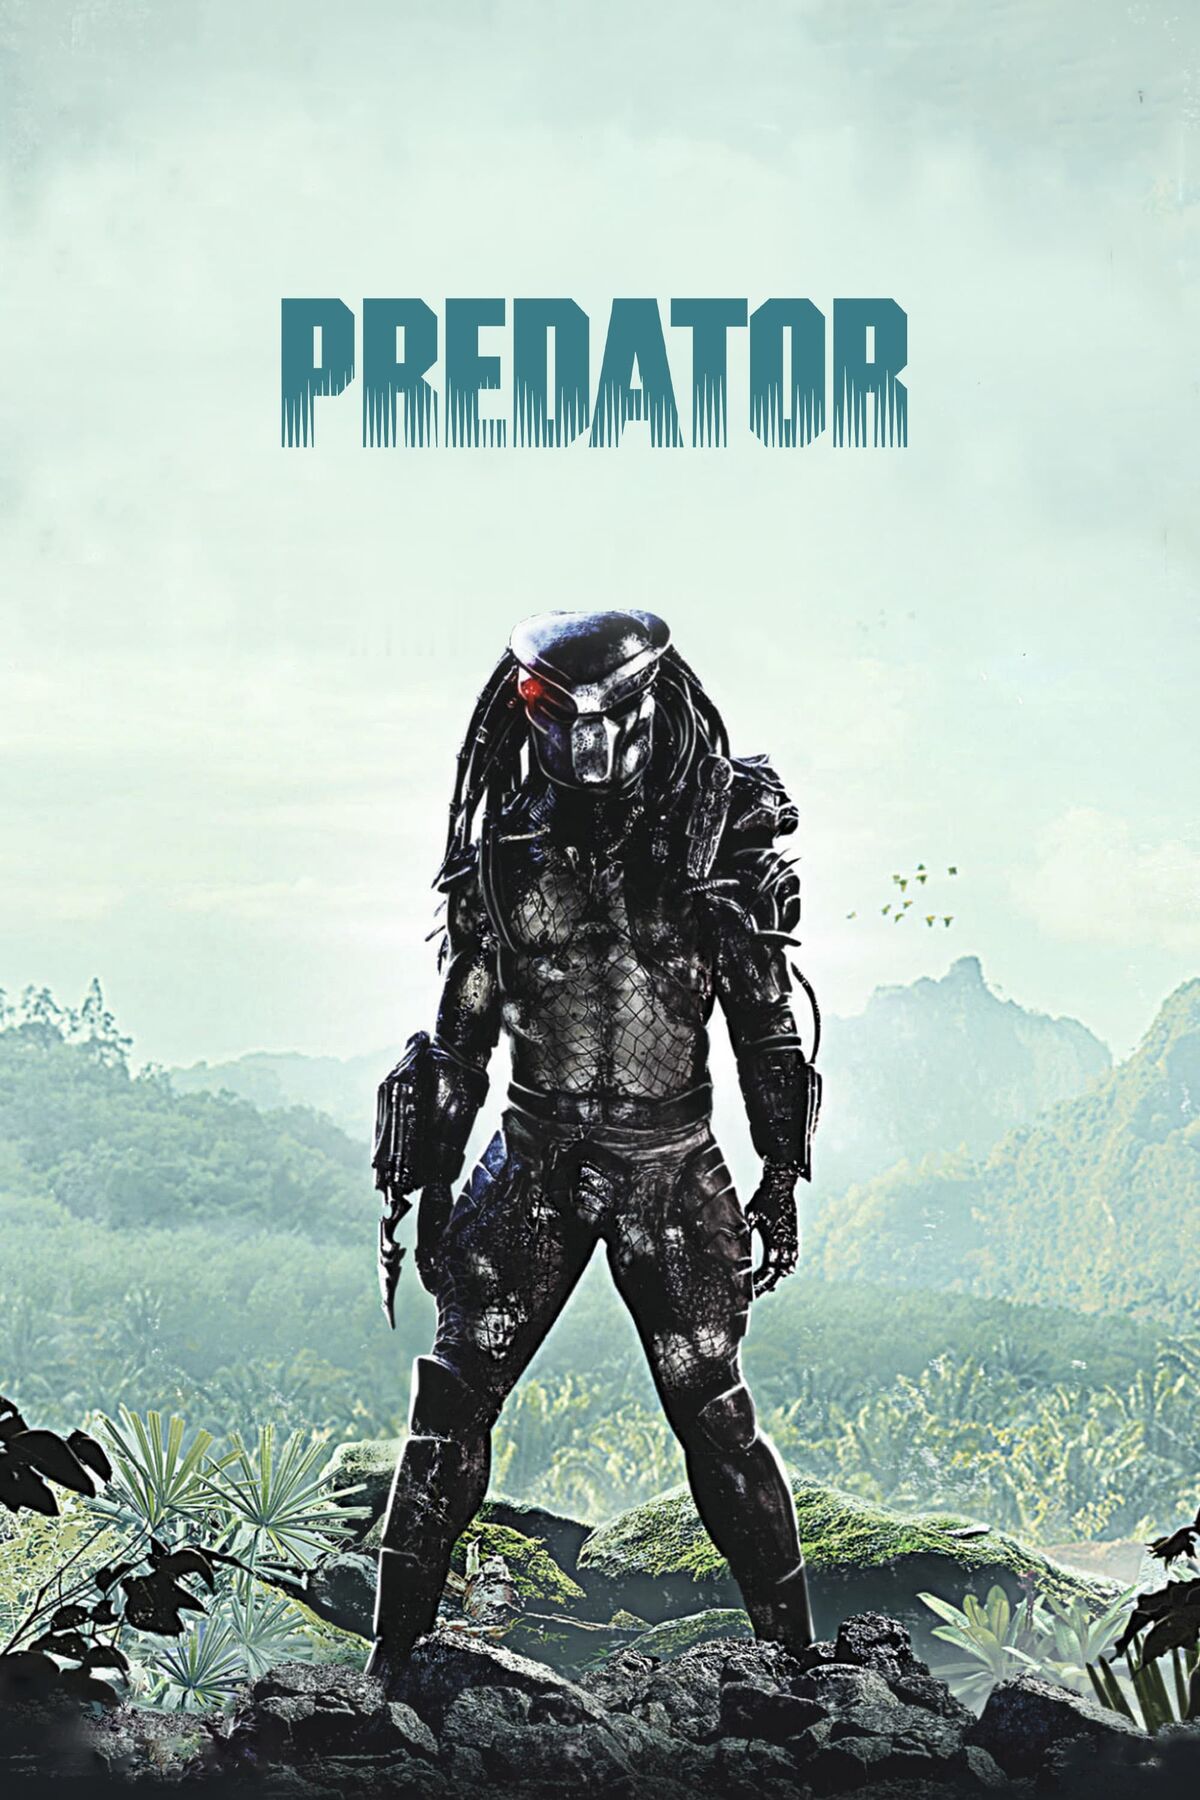 Alien Predator (2018) - IMDb